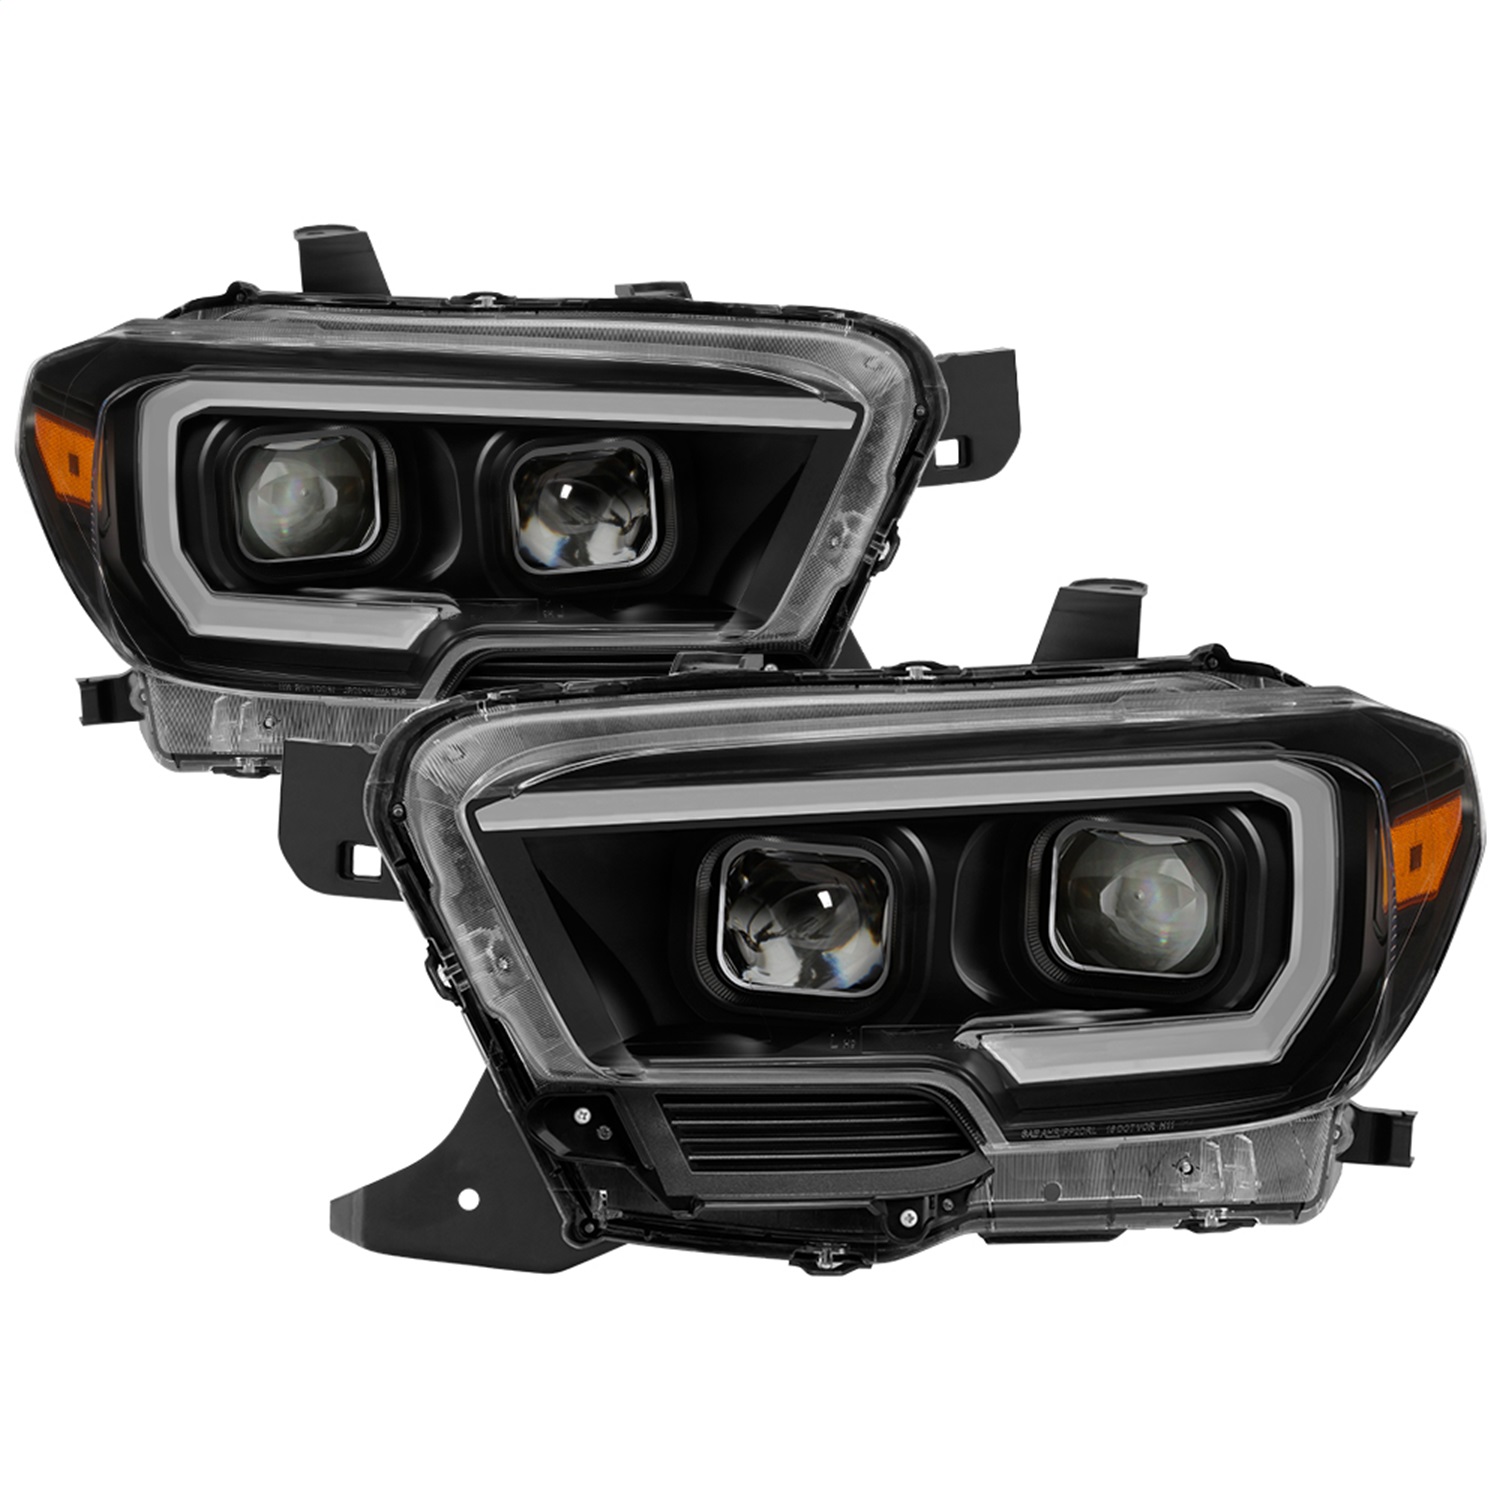 Spyder Auto 9039256 XTune DRL Light Bar Projector Headlights Fits 16-18 Tacoma